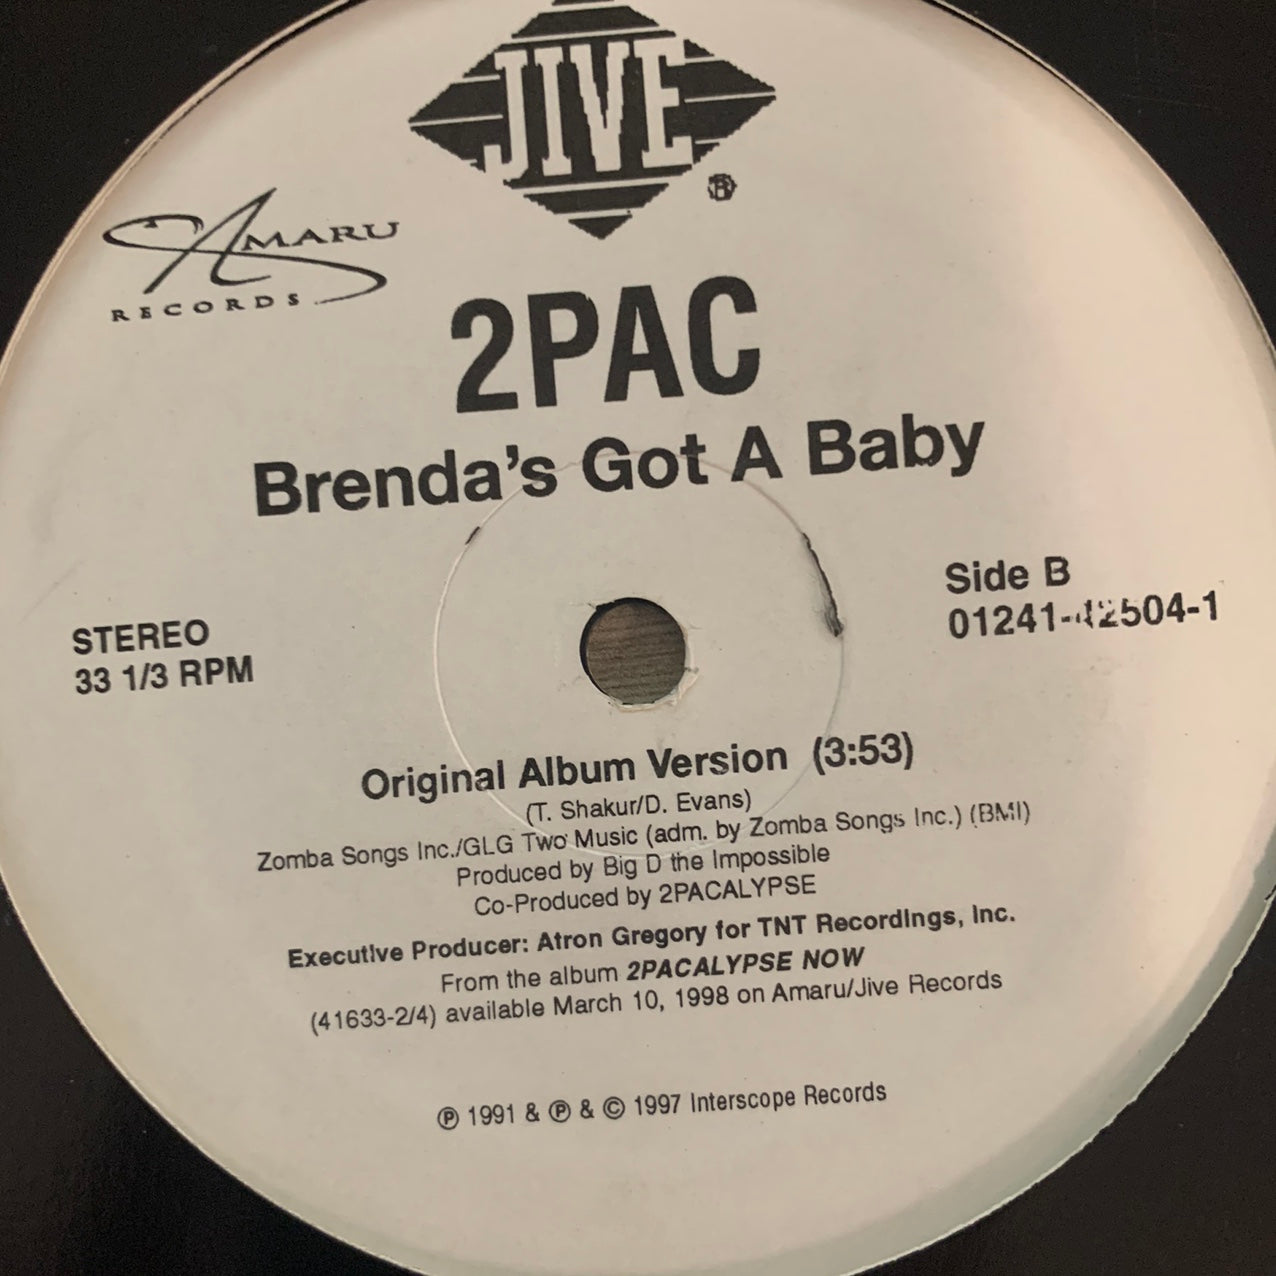 2pac “Do For Love” / “Brenda’s Got A Baby” 2 Track 12inch Vinyl